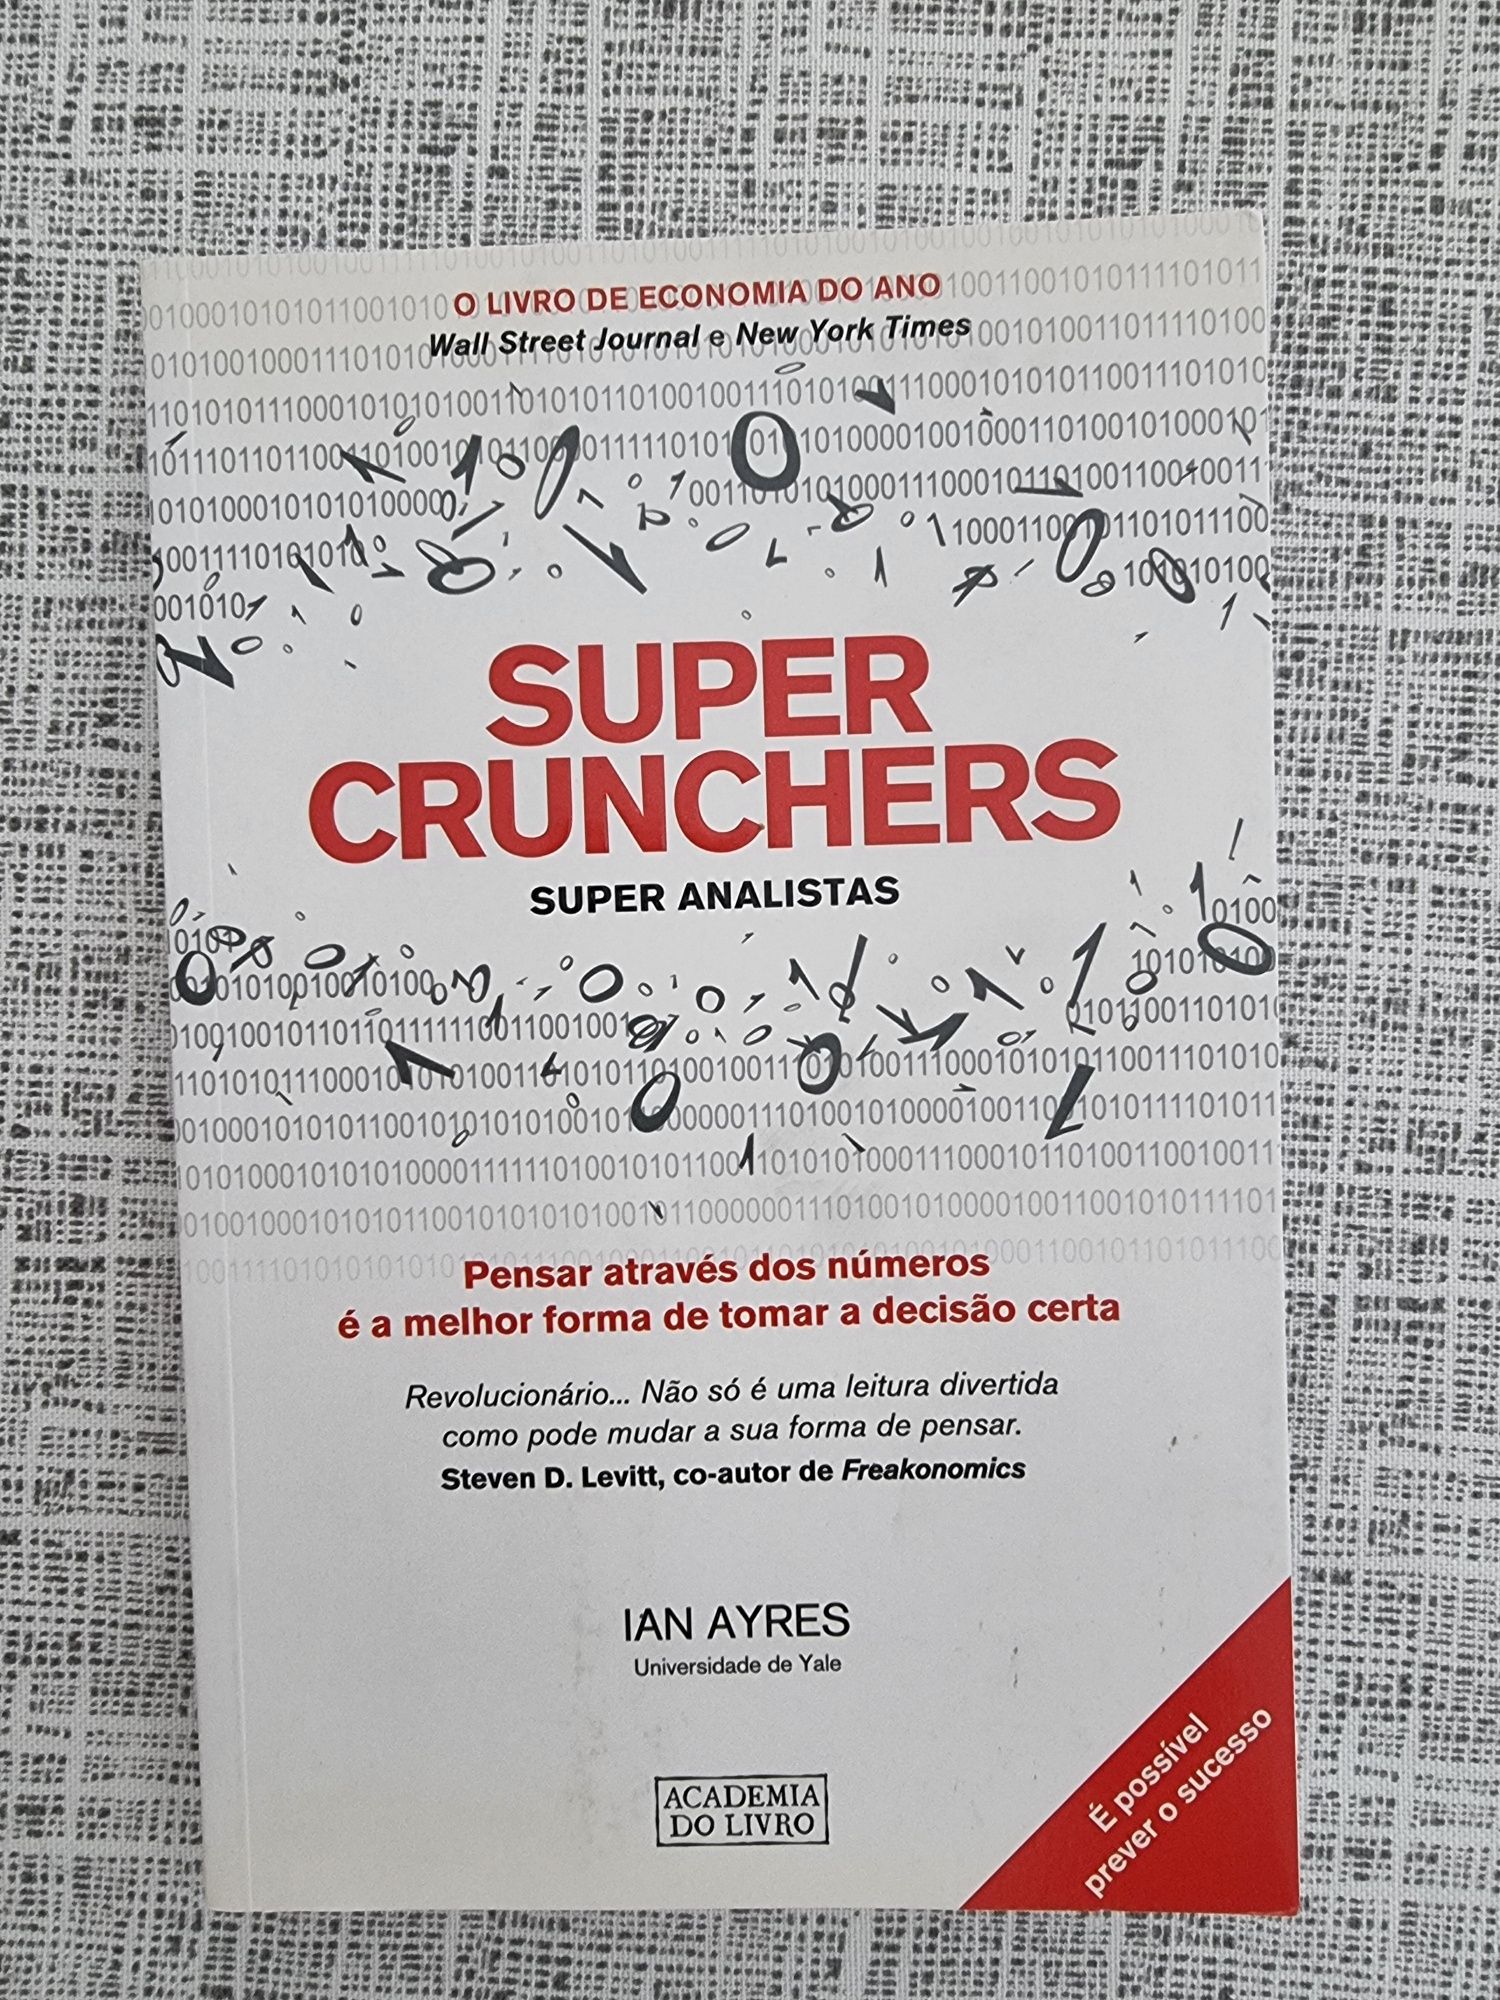 Livro "Super Crunchers"